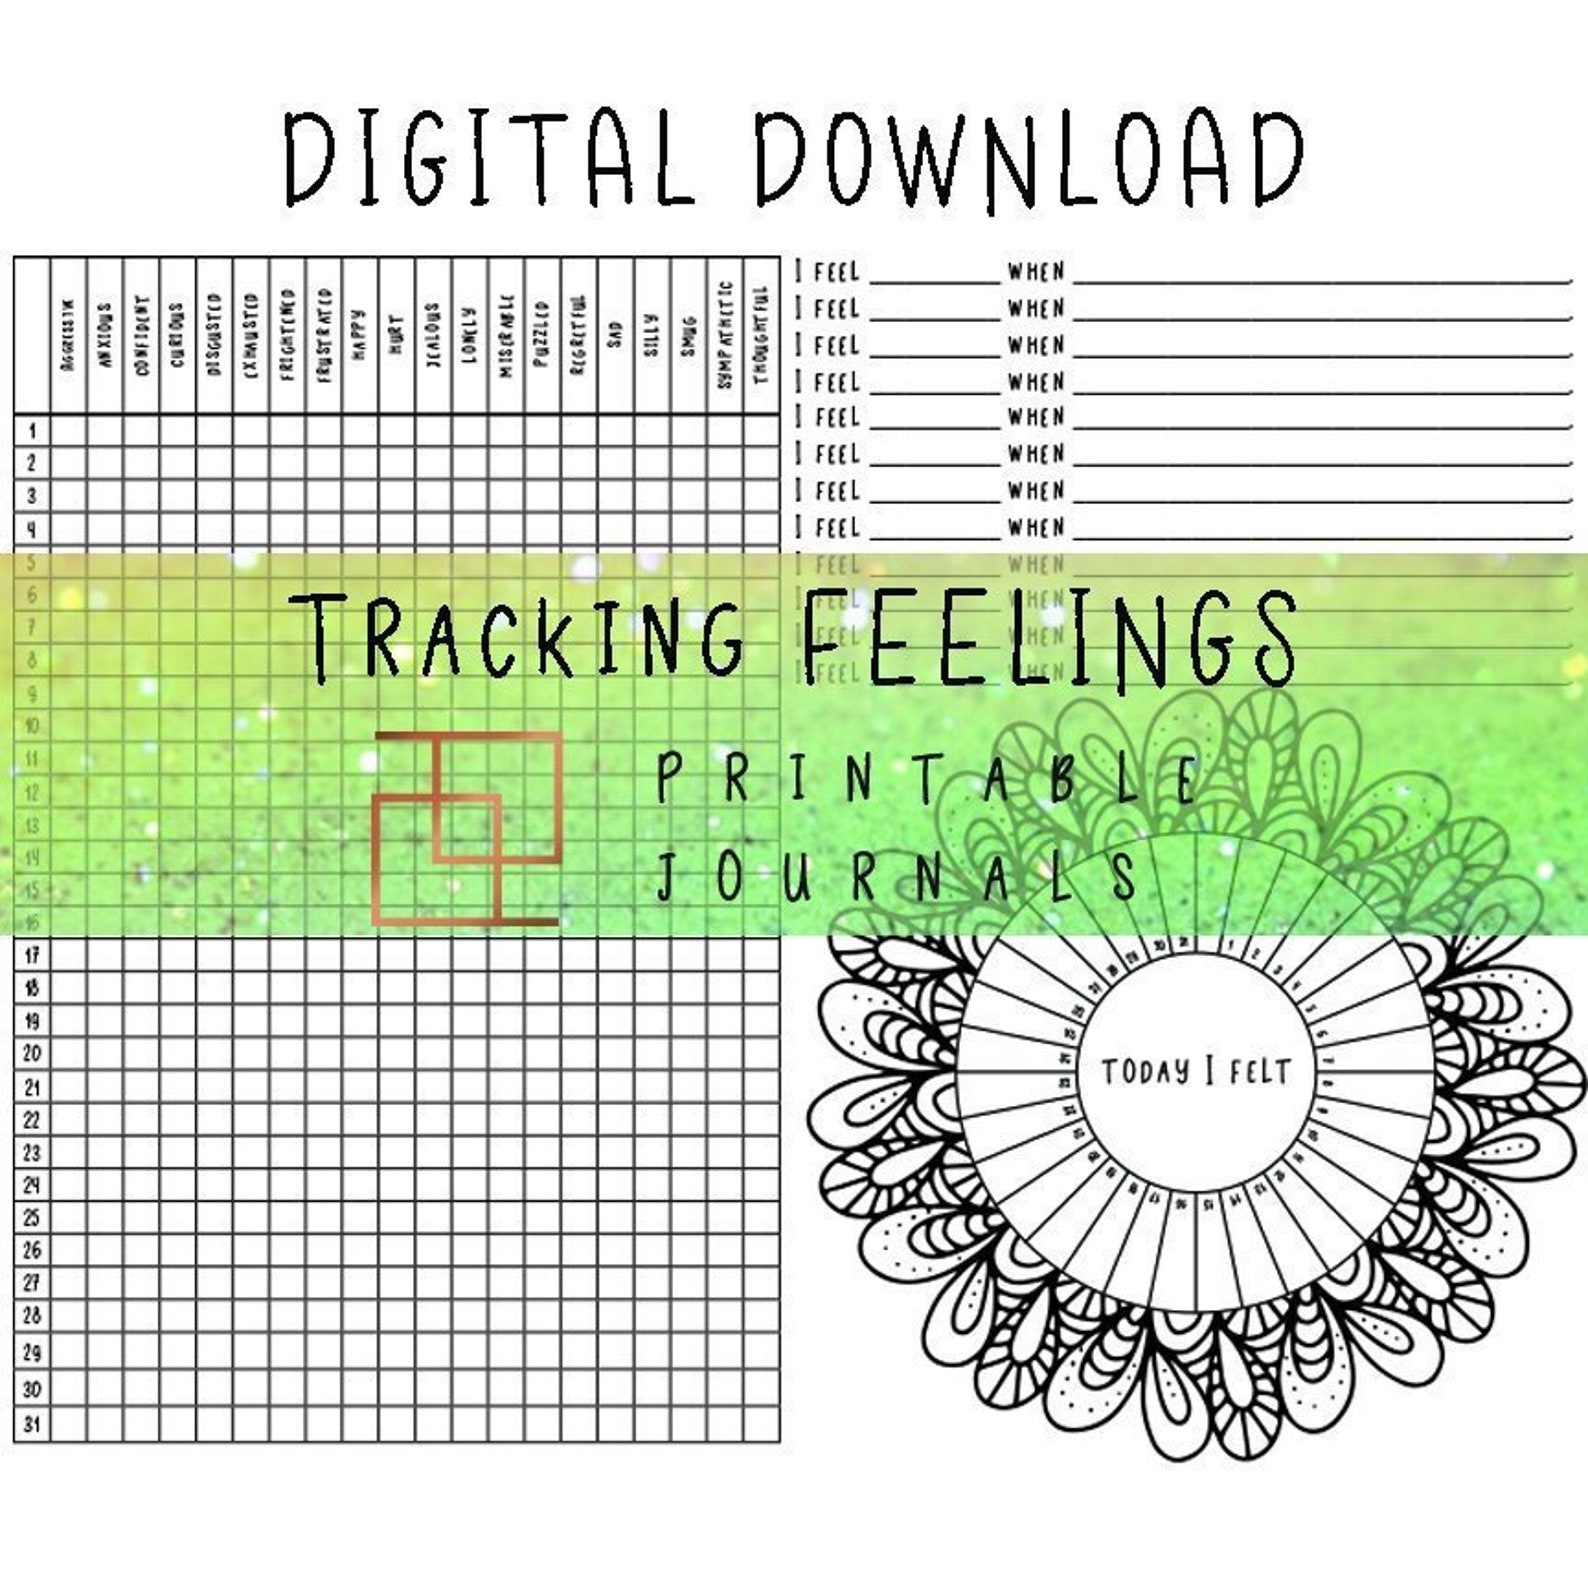 Tracking feeling